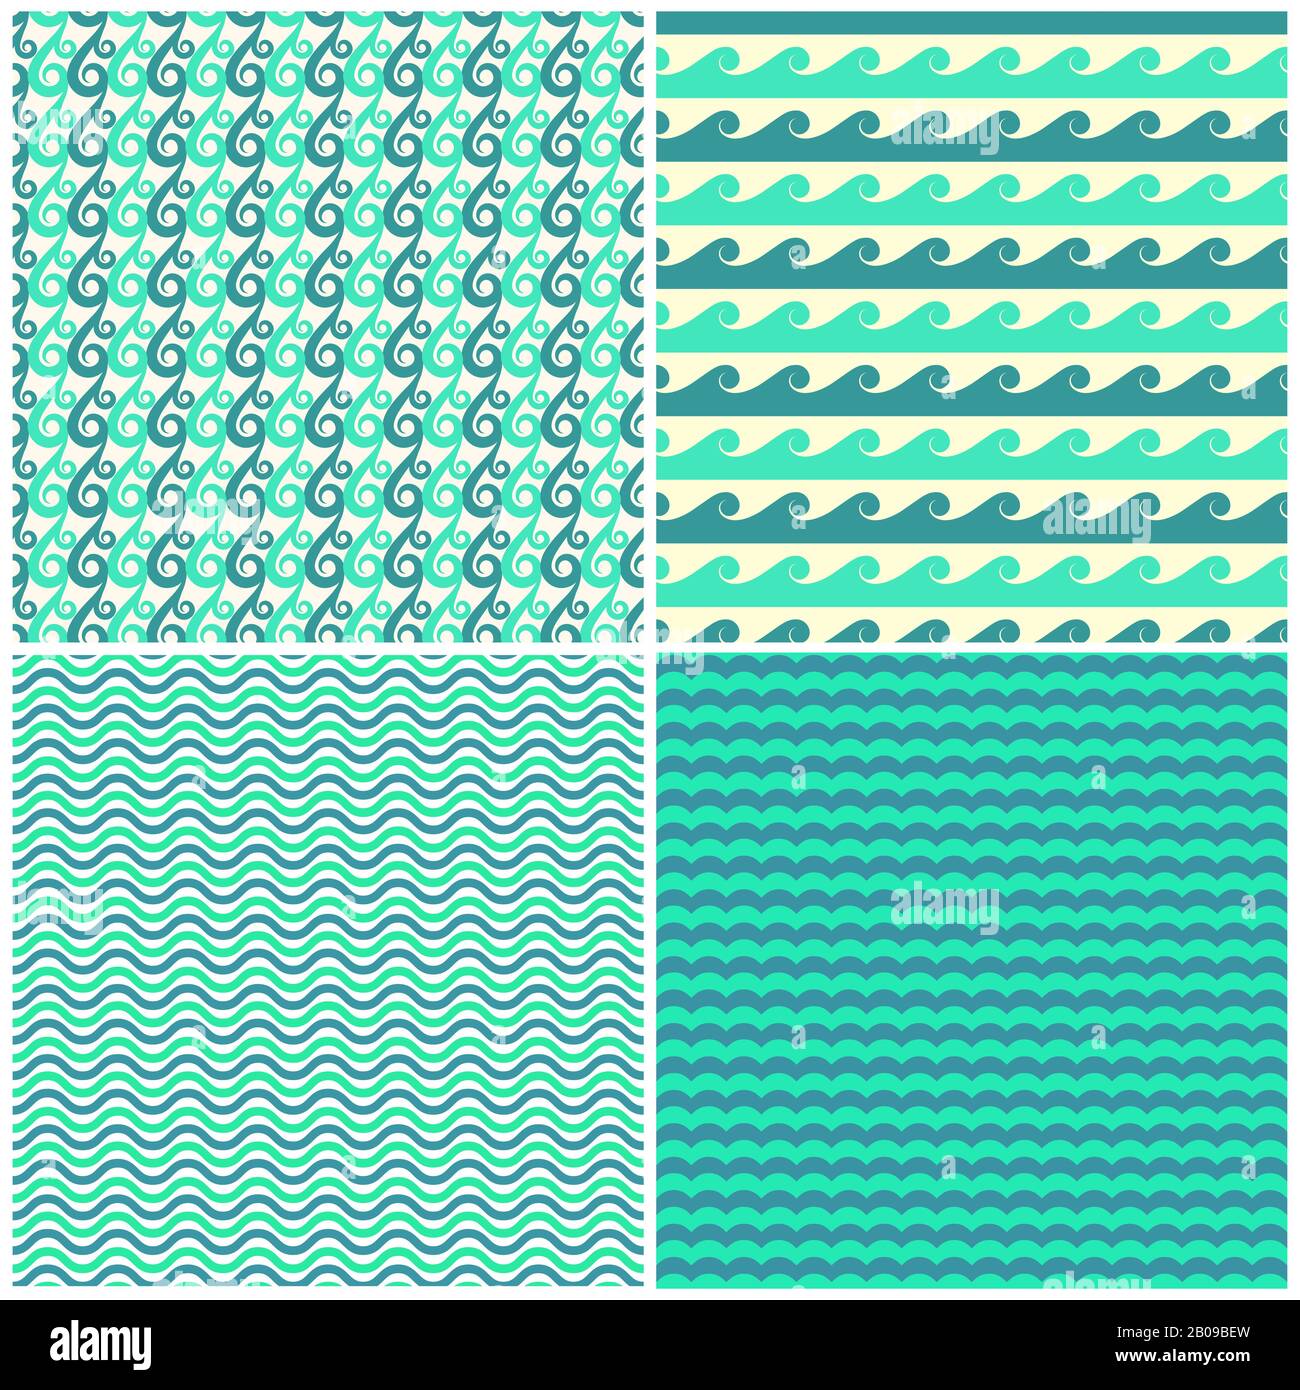 Satz von Vektor-Aqua-grünen Wellen nahtlose Muster. Abbildung der grünen Seewelle Stock Vektor